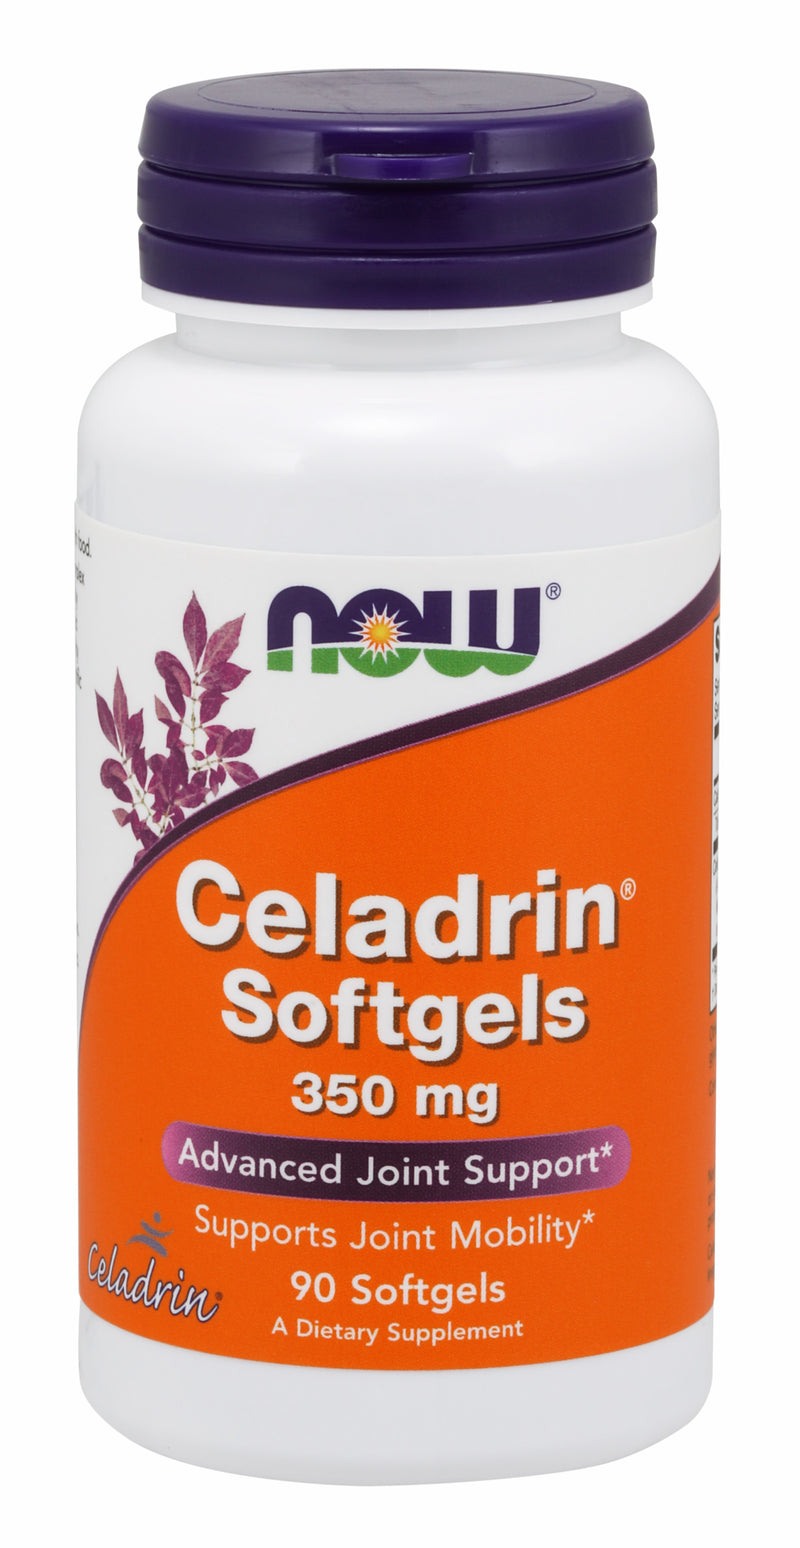 Celadrin Softgels 350 mg 90 Softgels